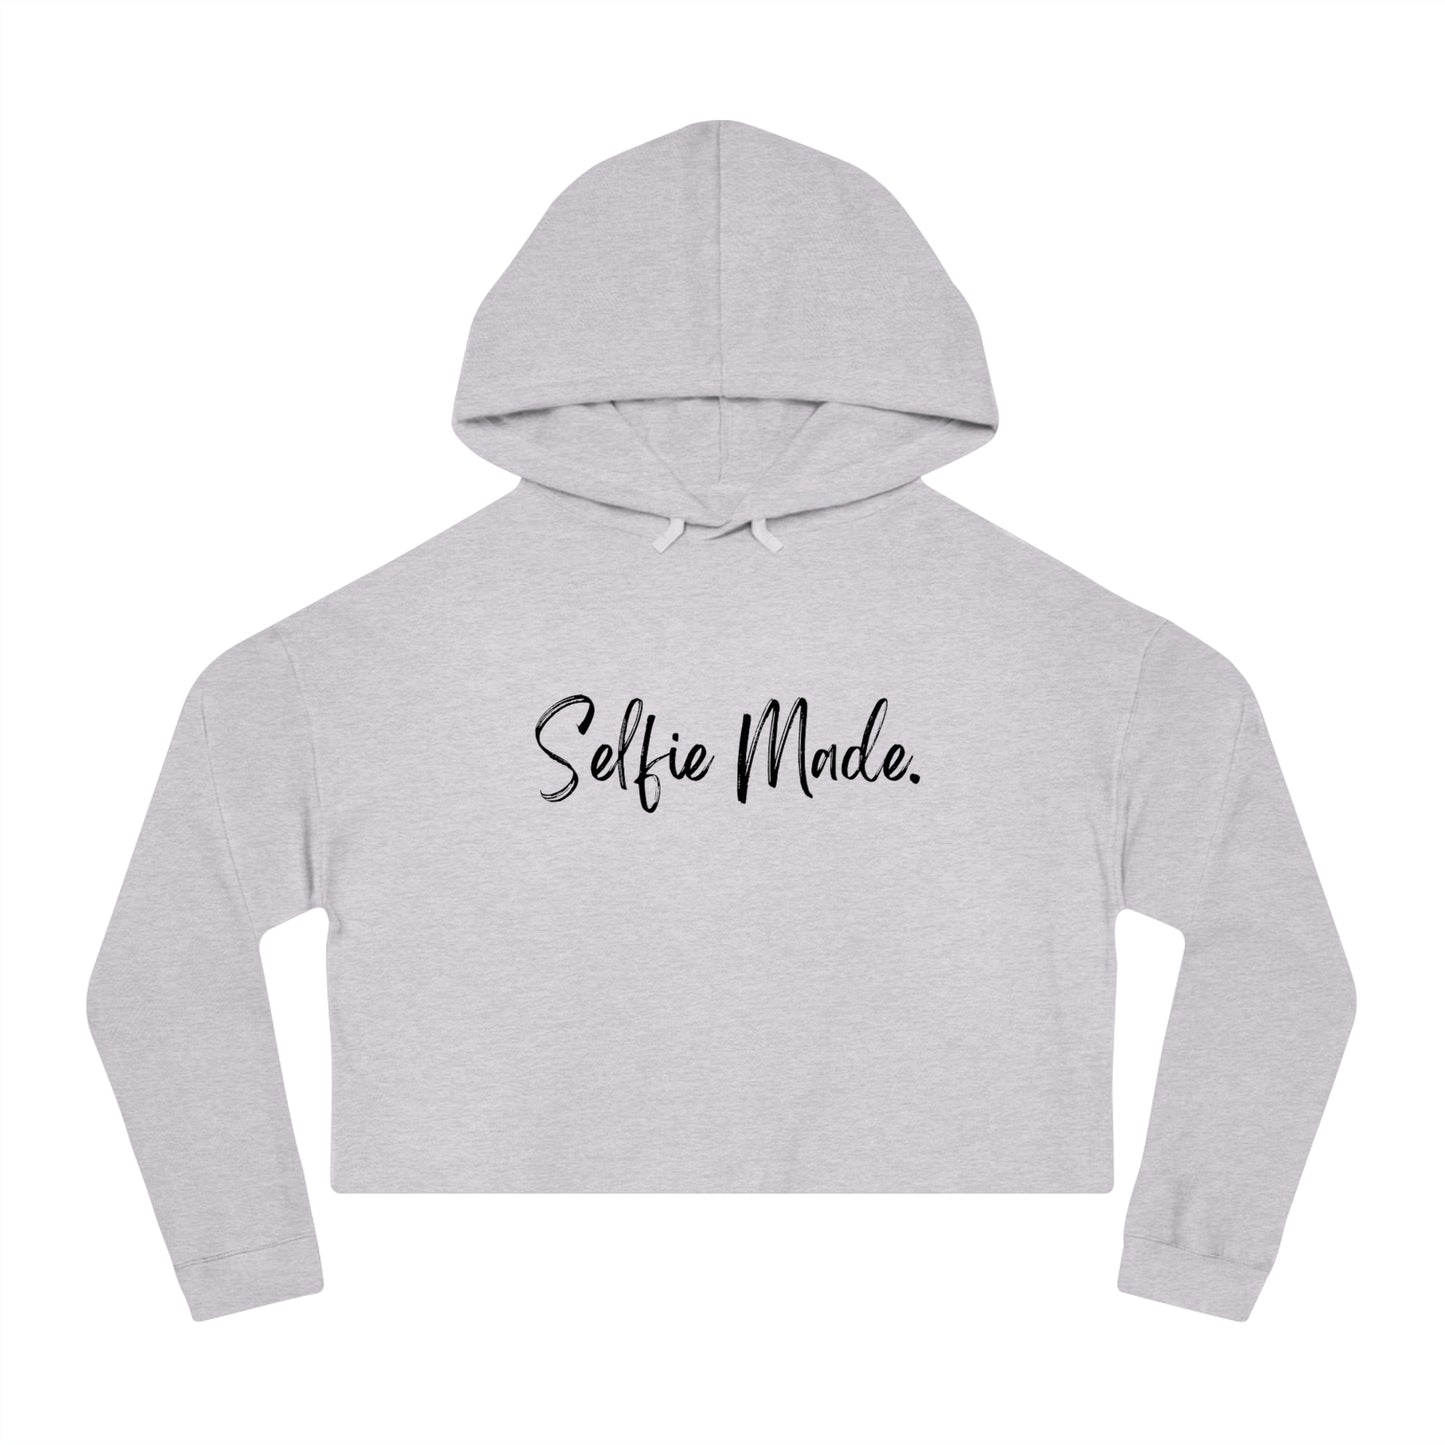 Selfie Made. Women’s Cropped Hooded Sweatshirt